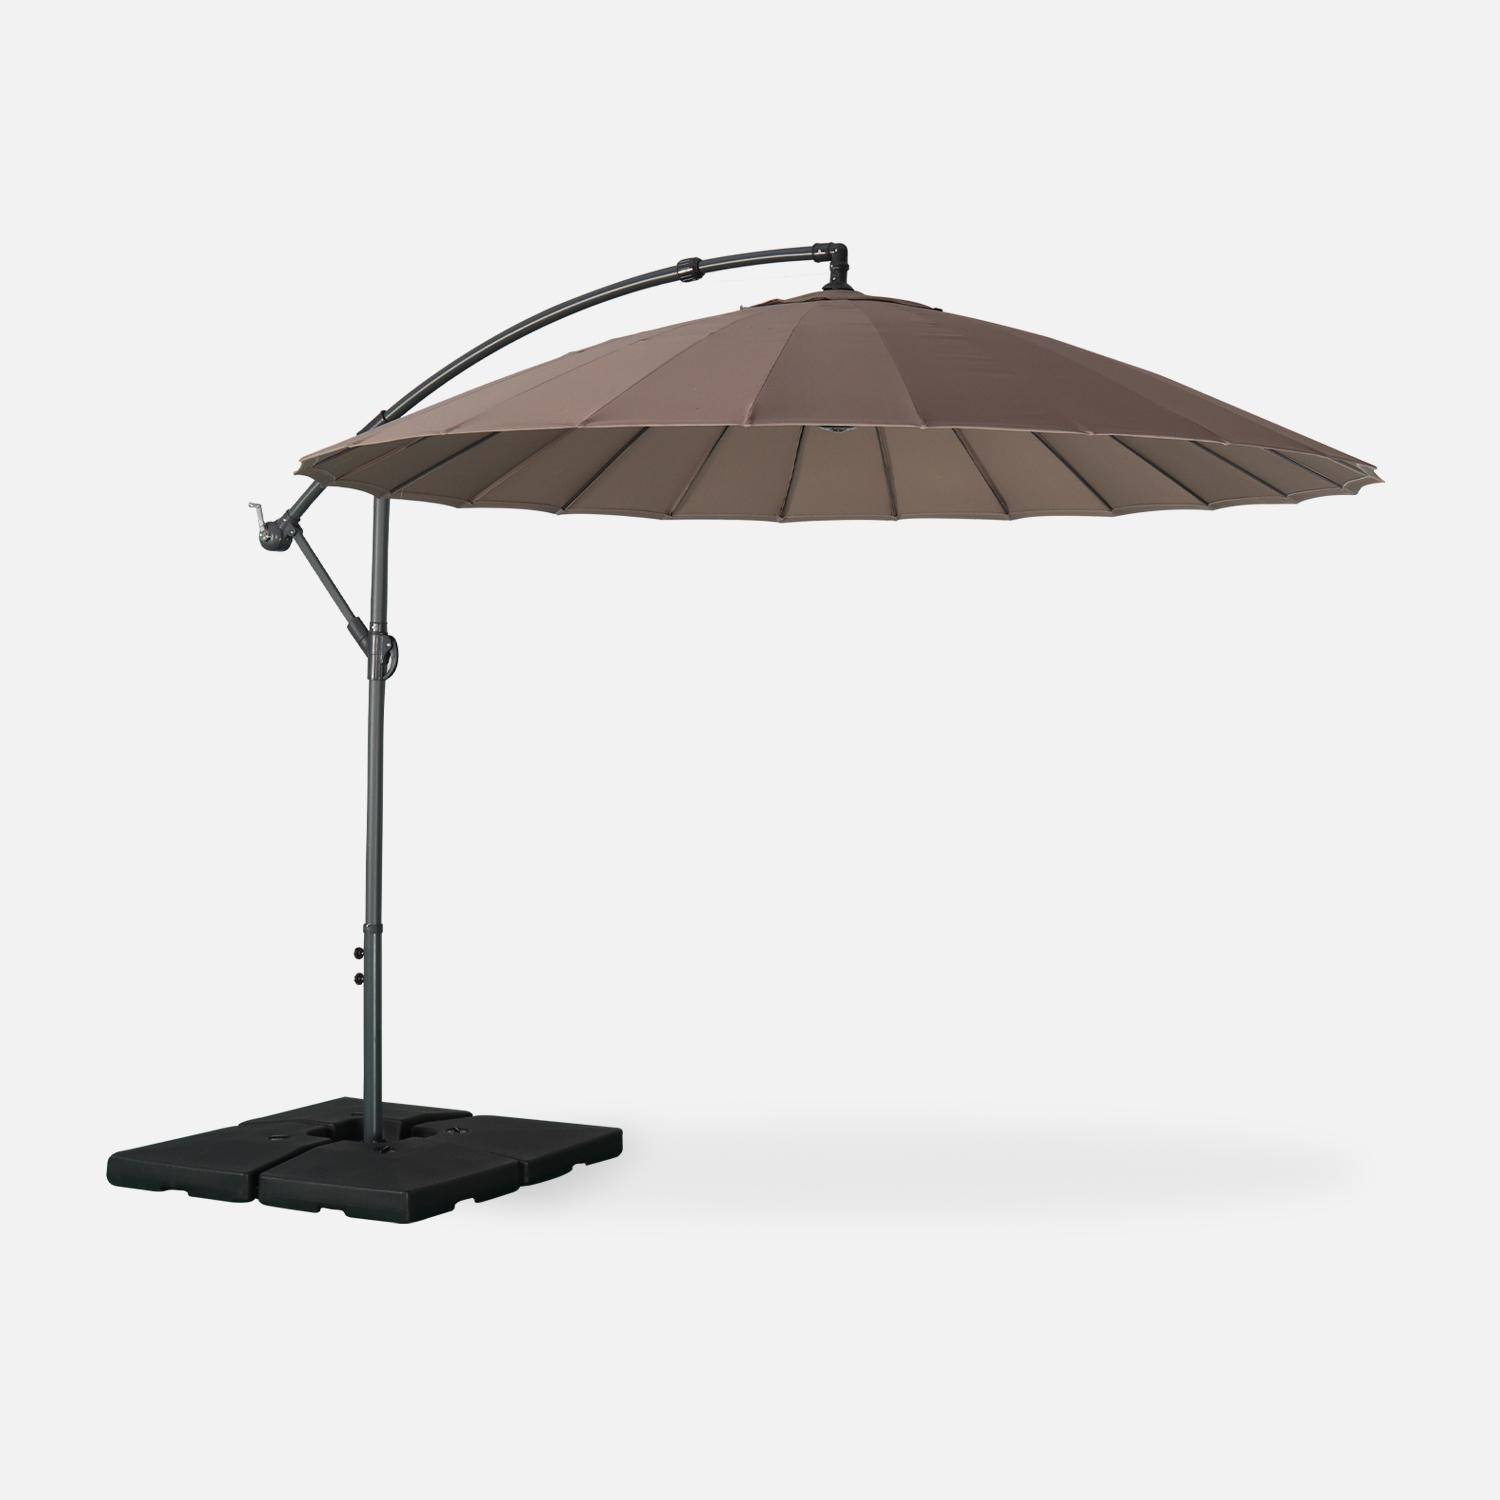 Cantilever parasol Ø300cm  - Anthracite frame, fibreglass ribs, anti-reverse crank - Shanghai - Beige-brown Photo2